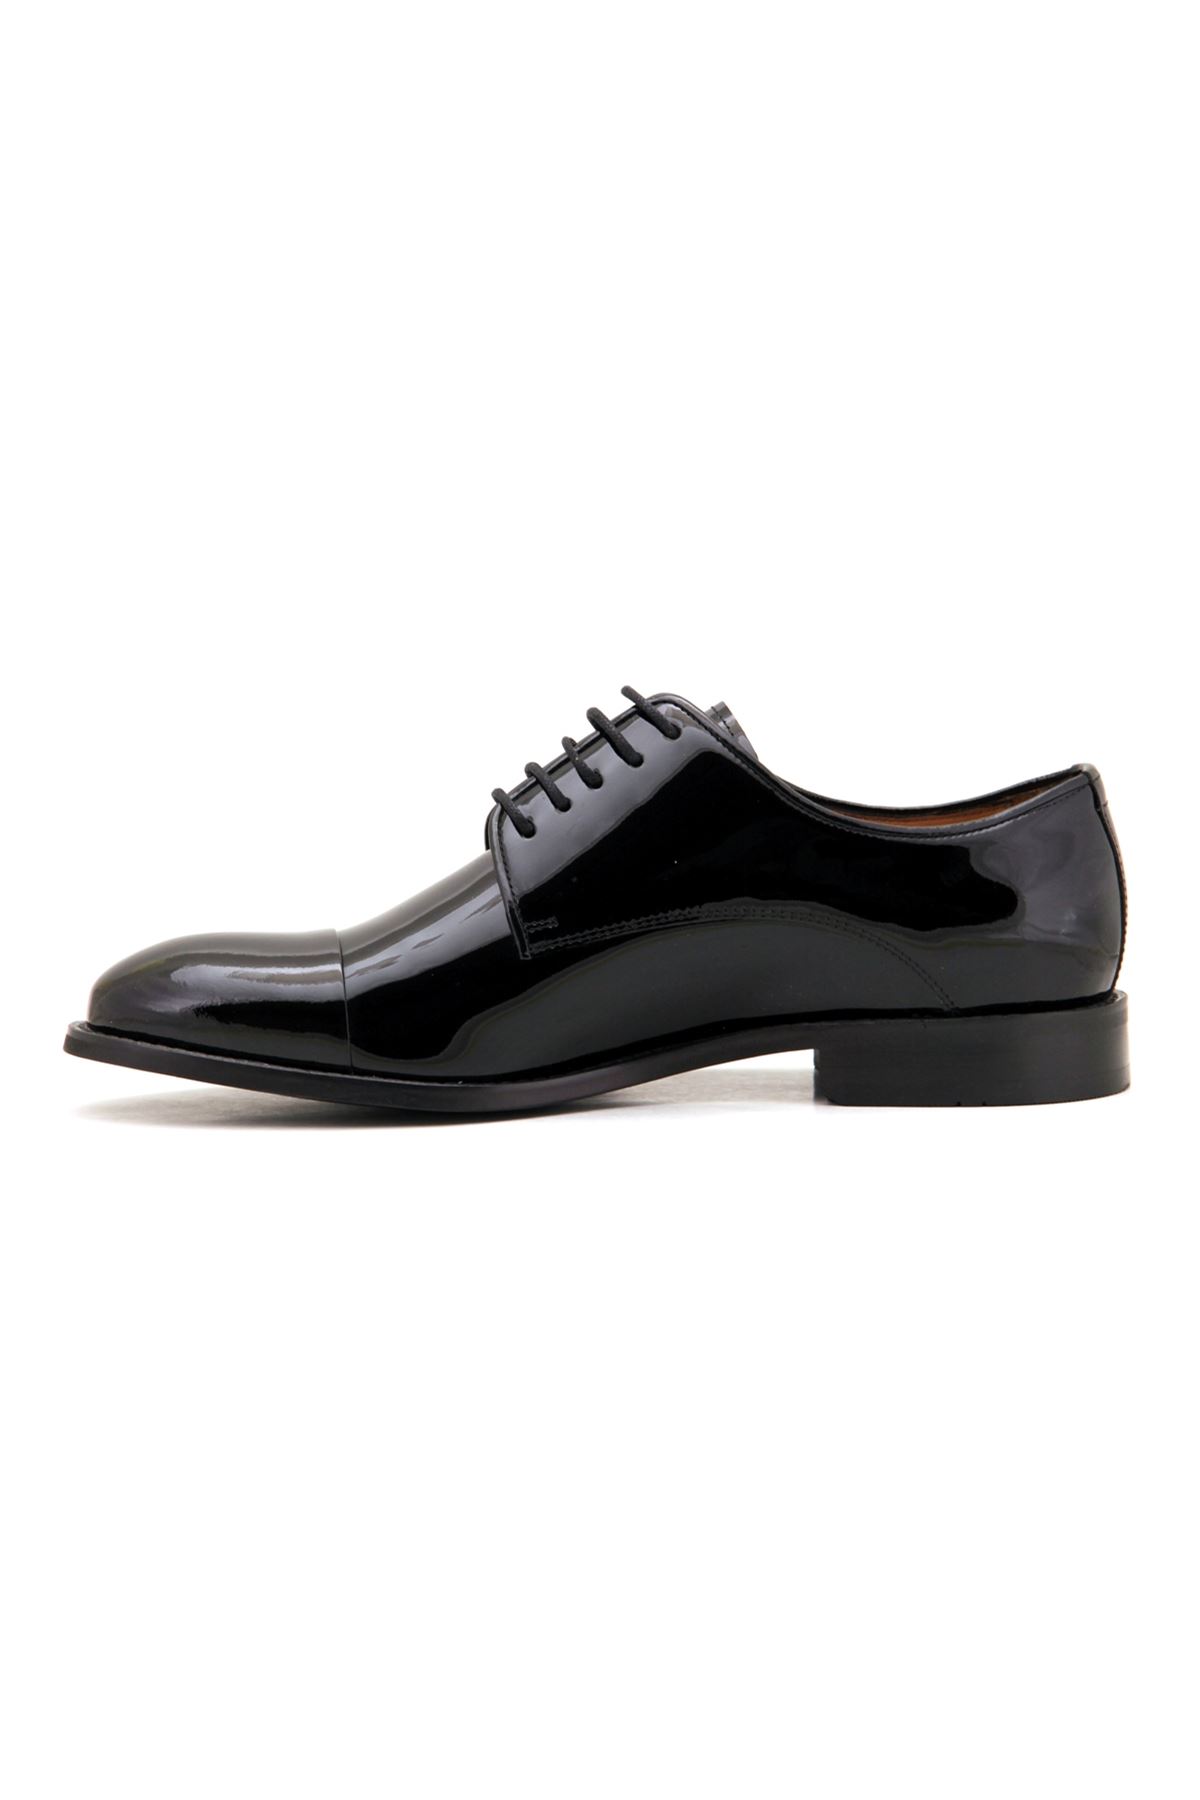 Libero 3920 Klasik Erkek Ayakkabı - Siyah Rugan